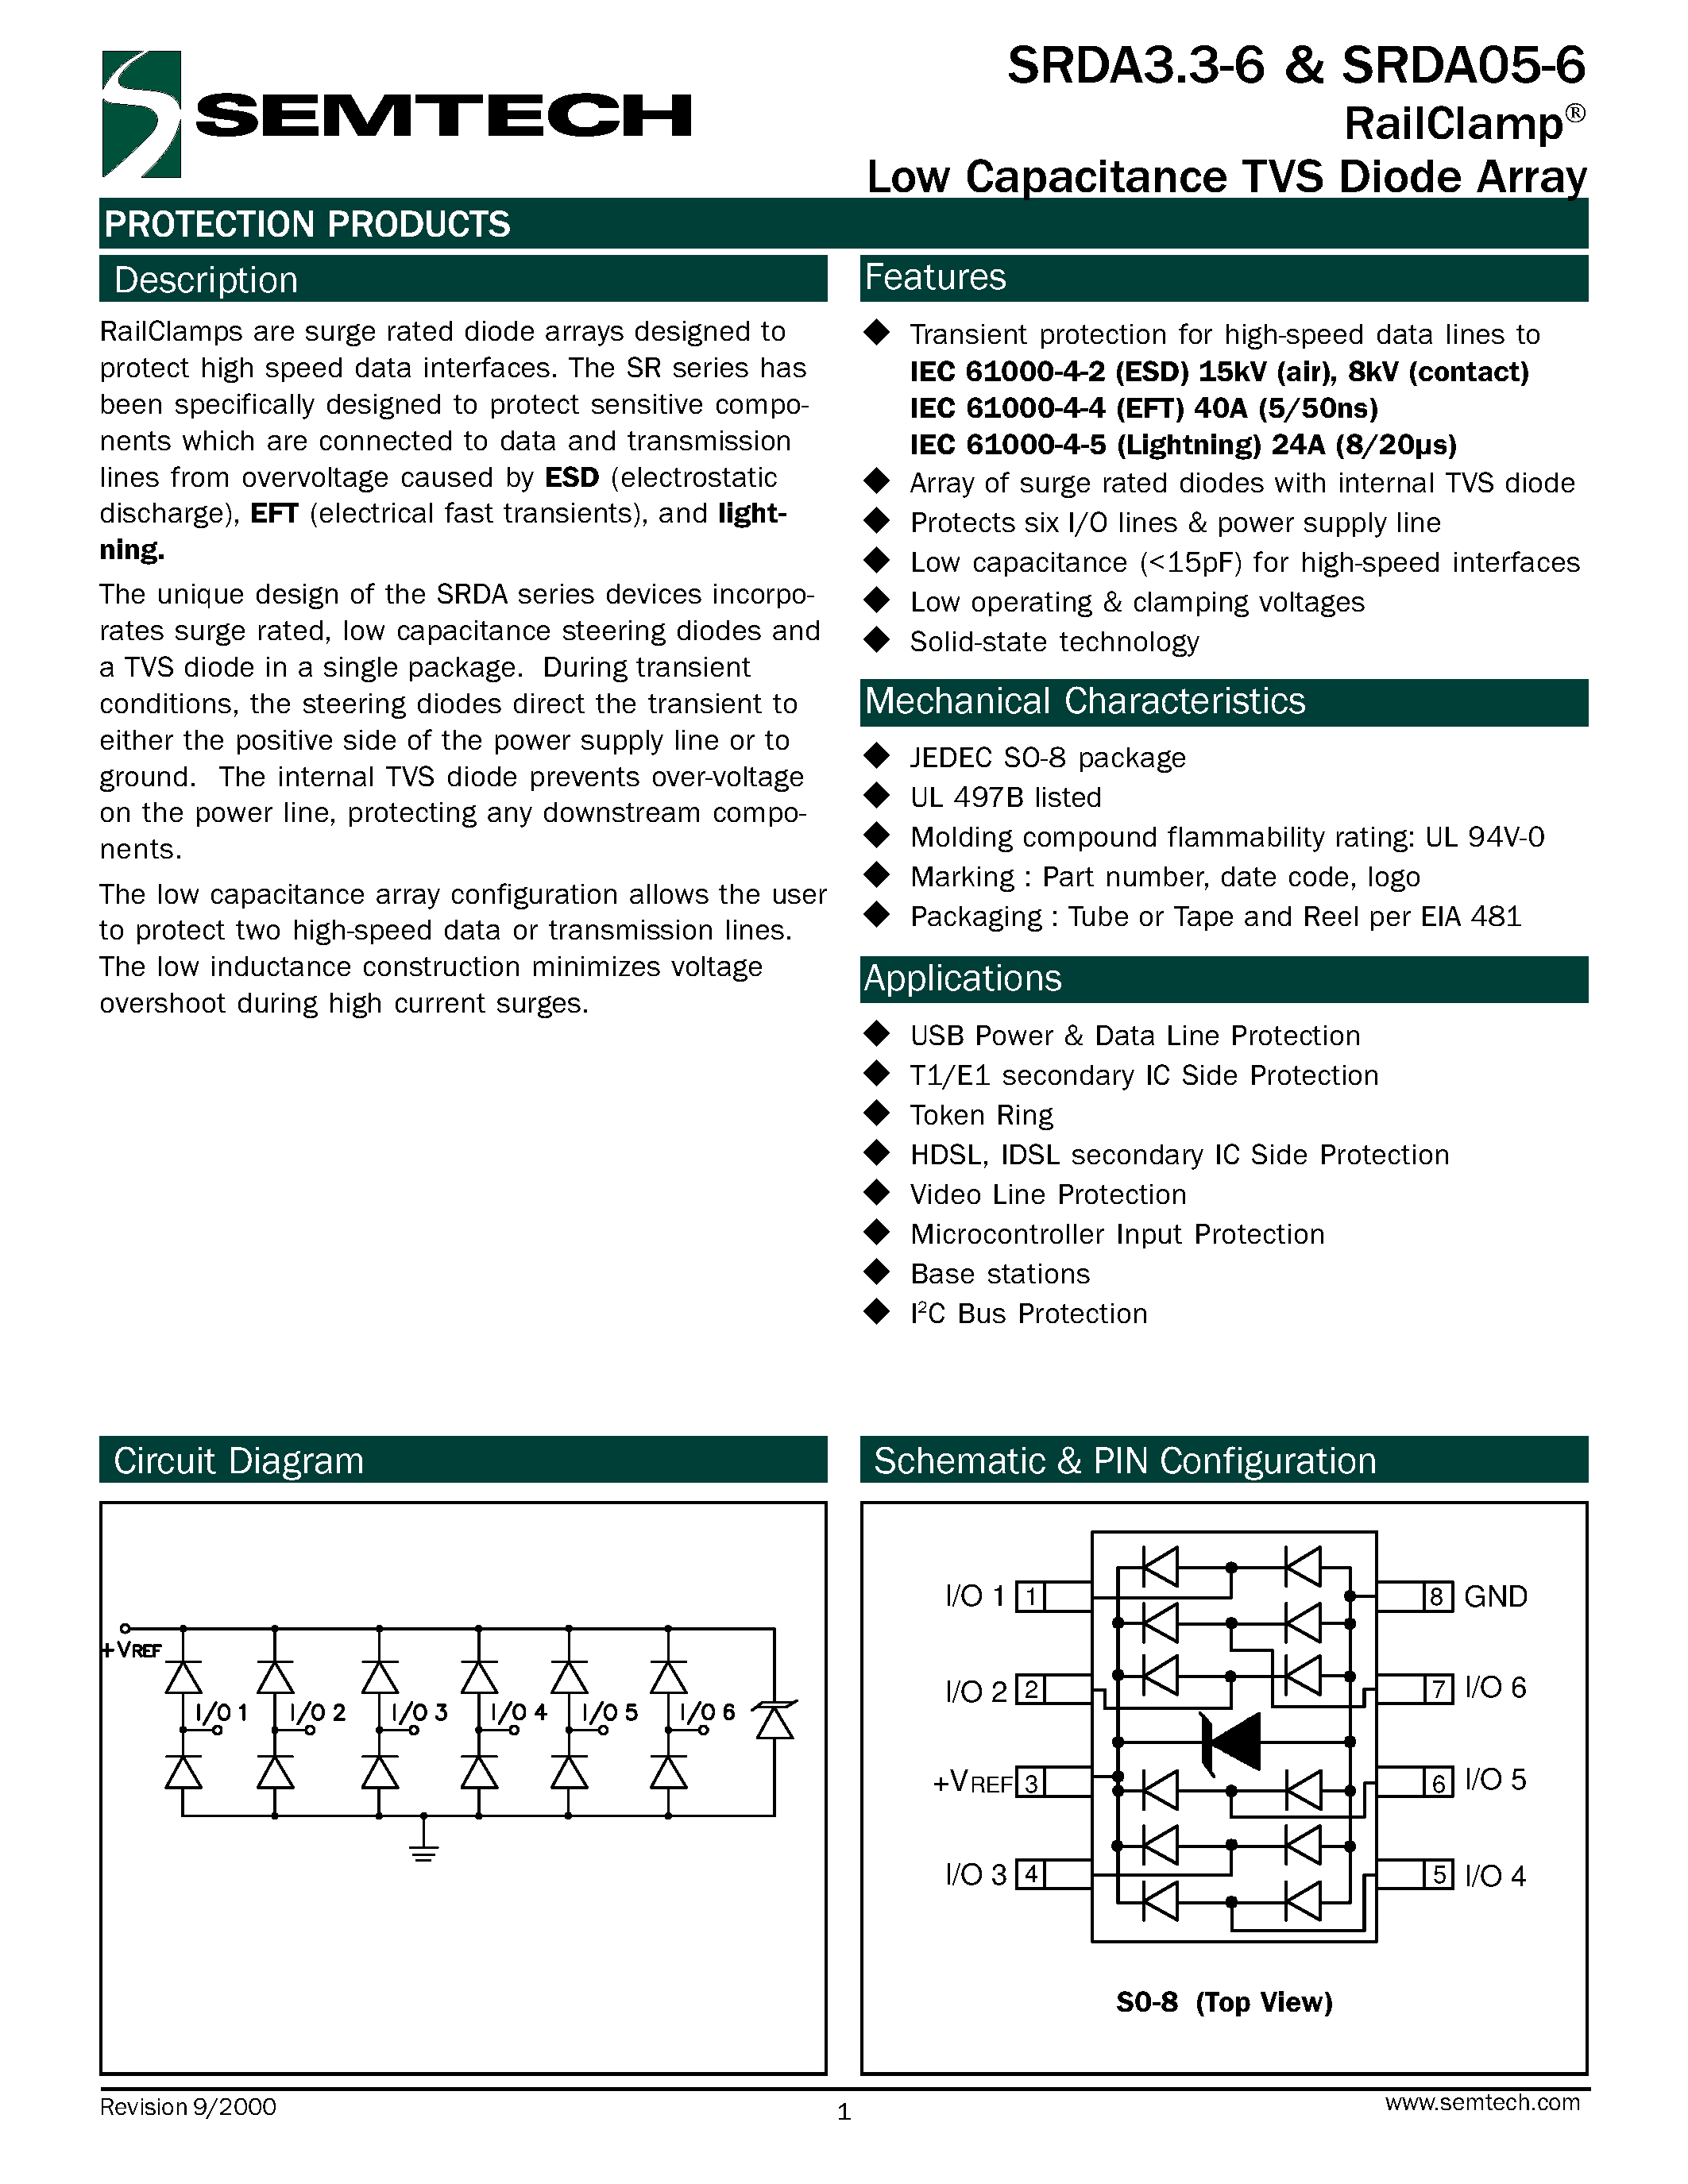 Даташит SRDA05-6 - RailClamp Low Capacitance TVS Diode Array страница 1